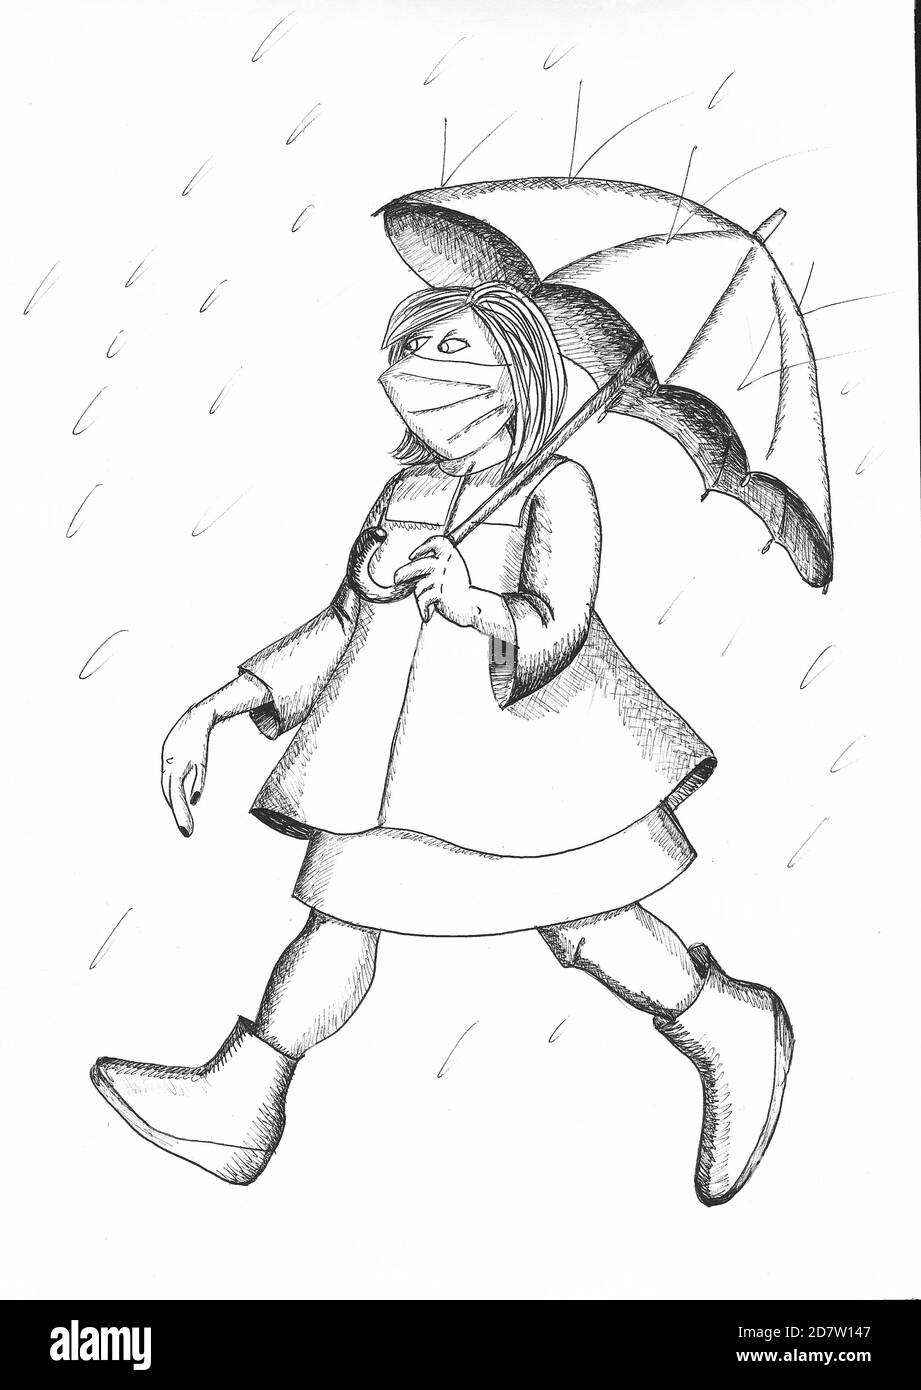 Woman wearing raincoat, umbrella and galoshes. Illustration. Stock Photo